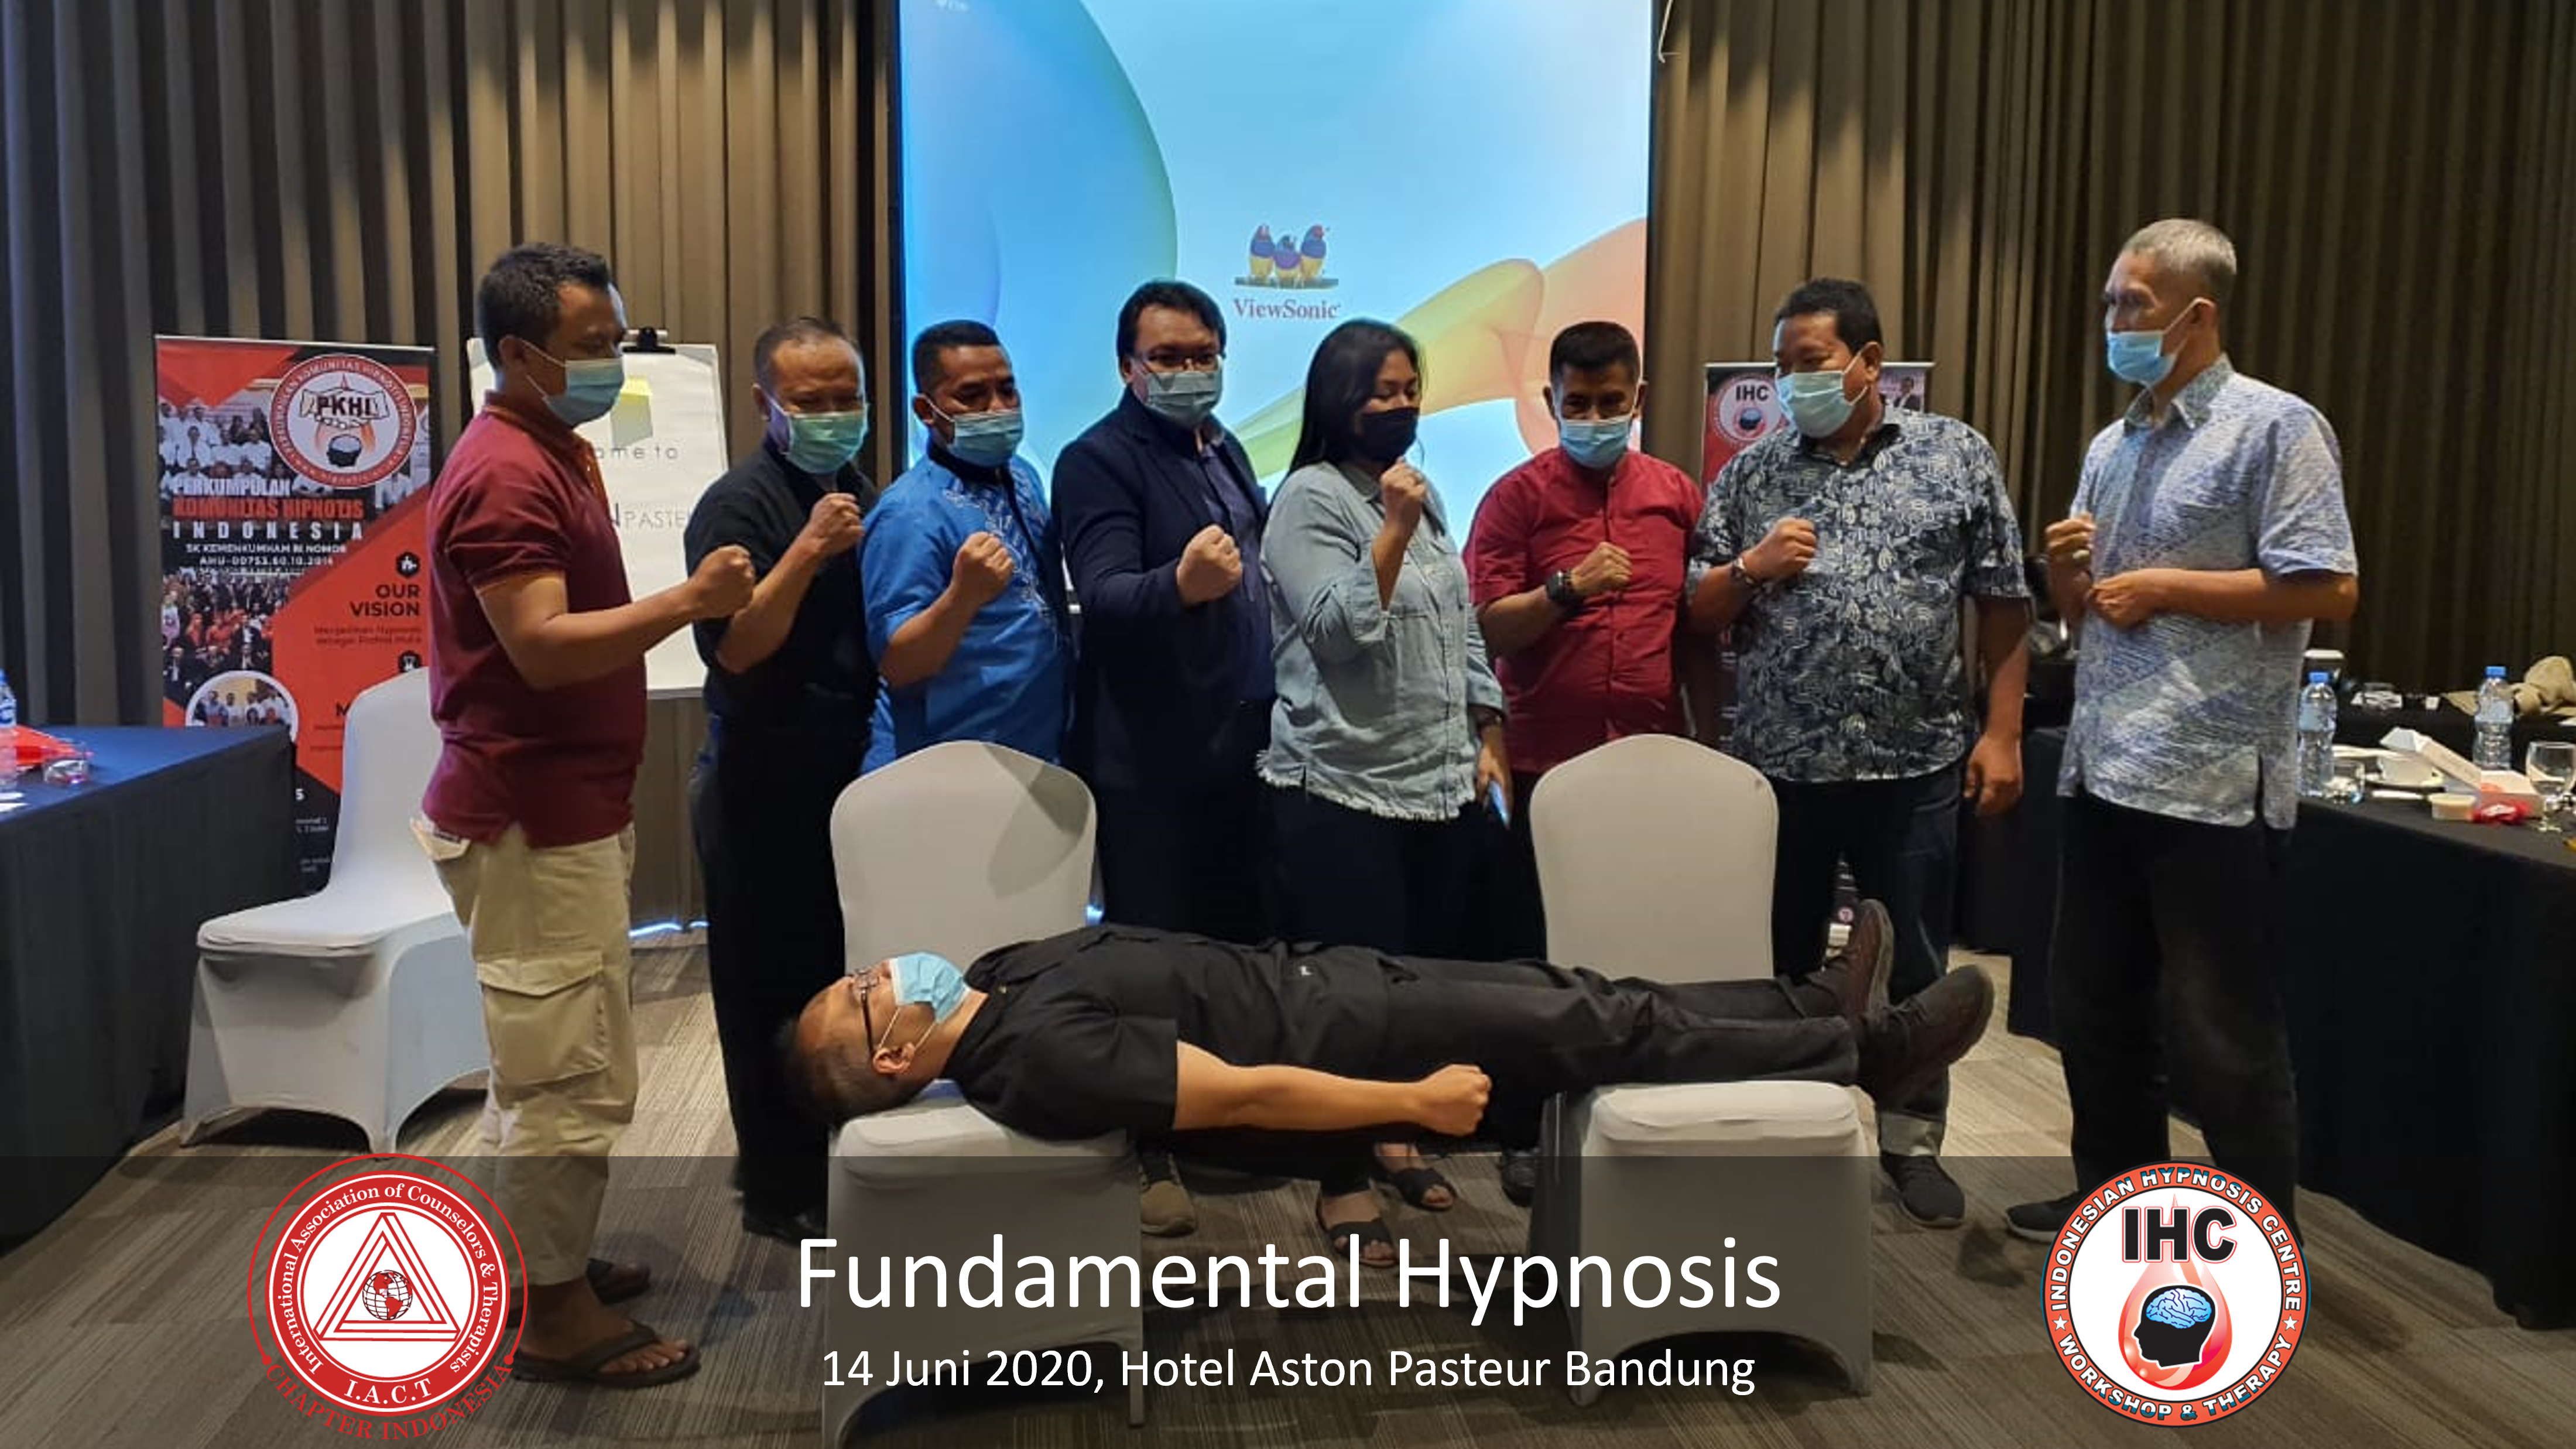 Andri Hakim 1 Fundamental Hypnosis - Bandung 14 Juni 2020